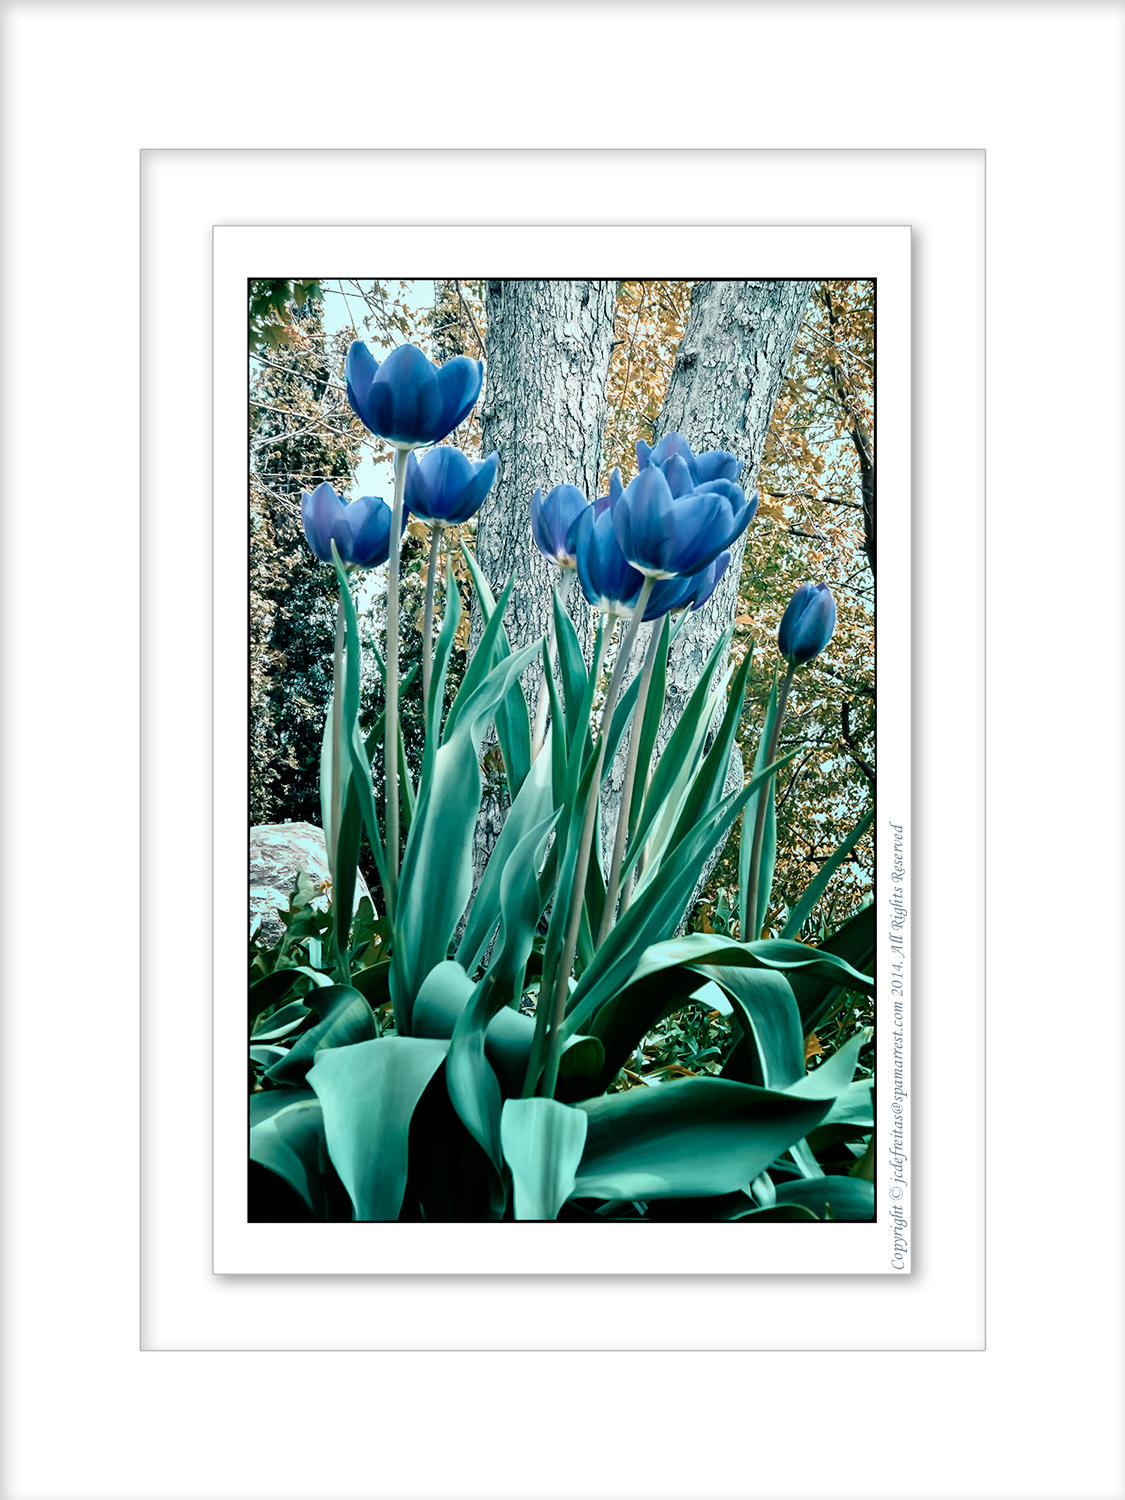 2014 - Tulips - Finally Spring has Sprung in Toronto, Ontario - Canada